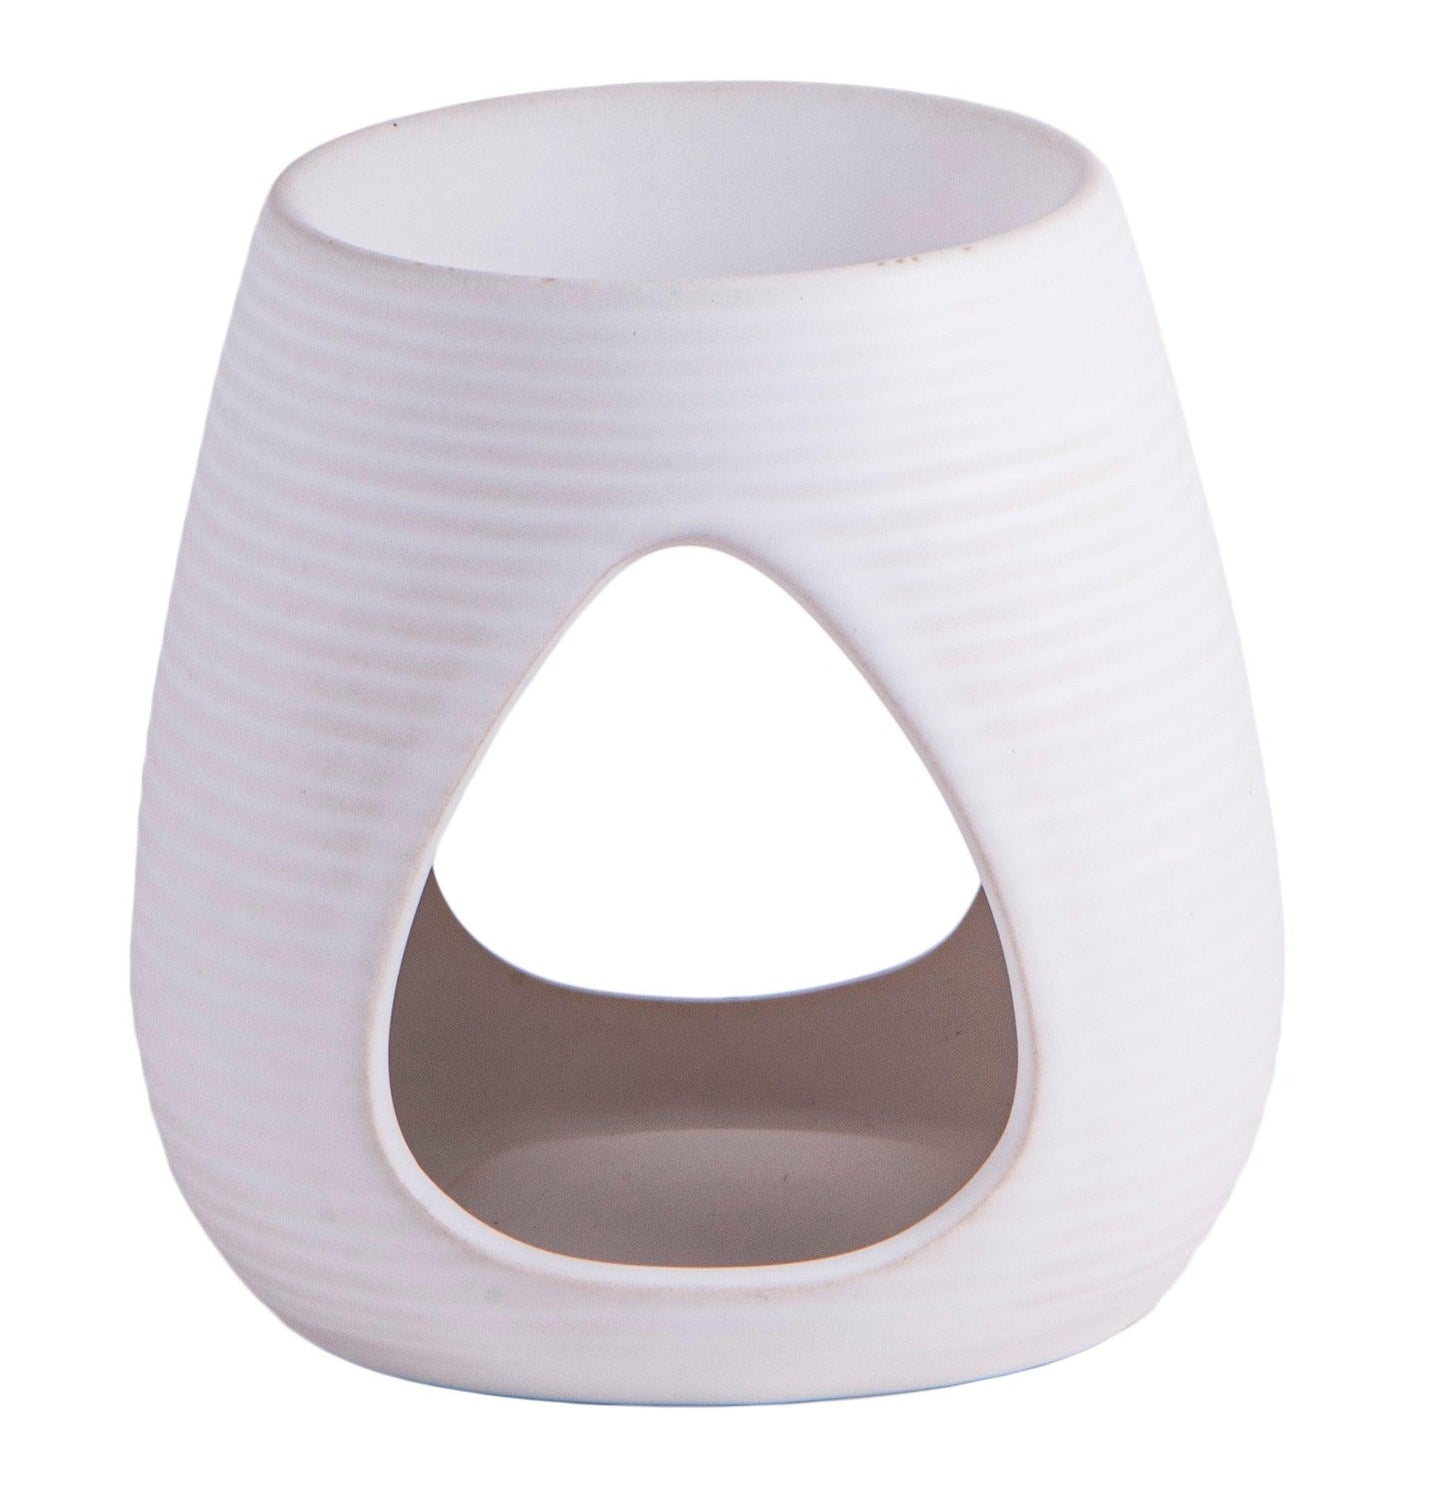 Aromalampe/ Duftlampe weiß Keramik - SHUAIVIBES